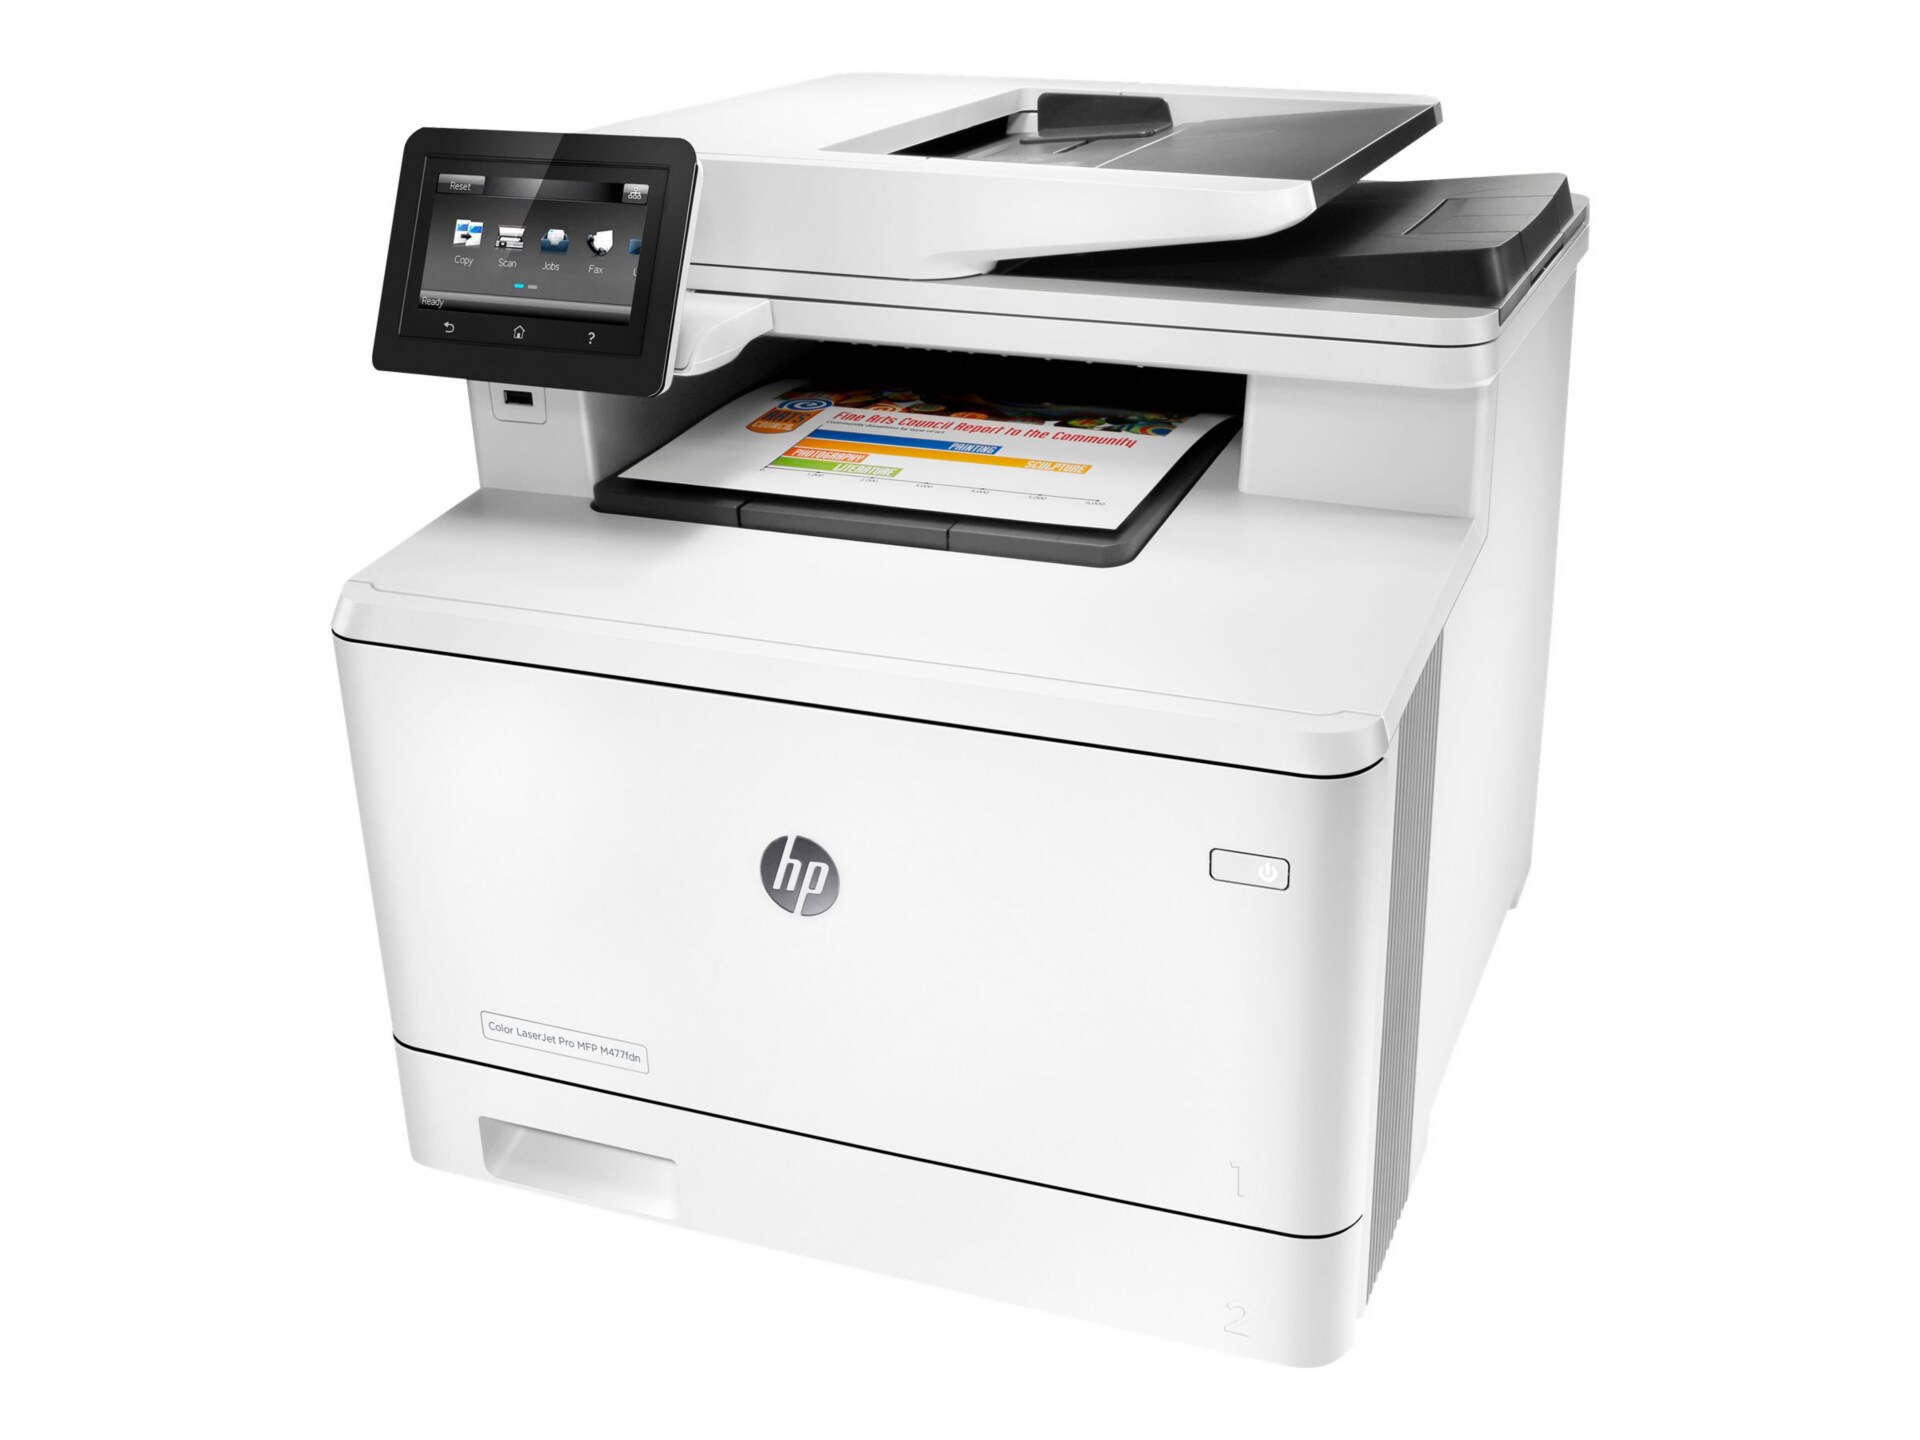 HP Color LaserJet Pro MFP M477fdn - multifunction printer - color